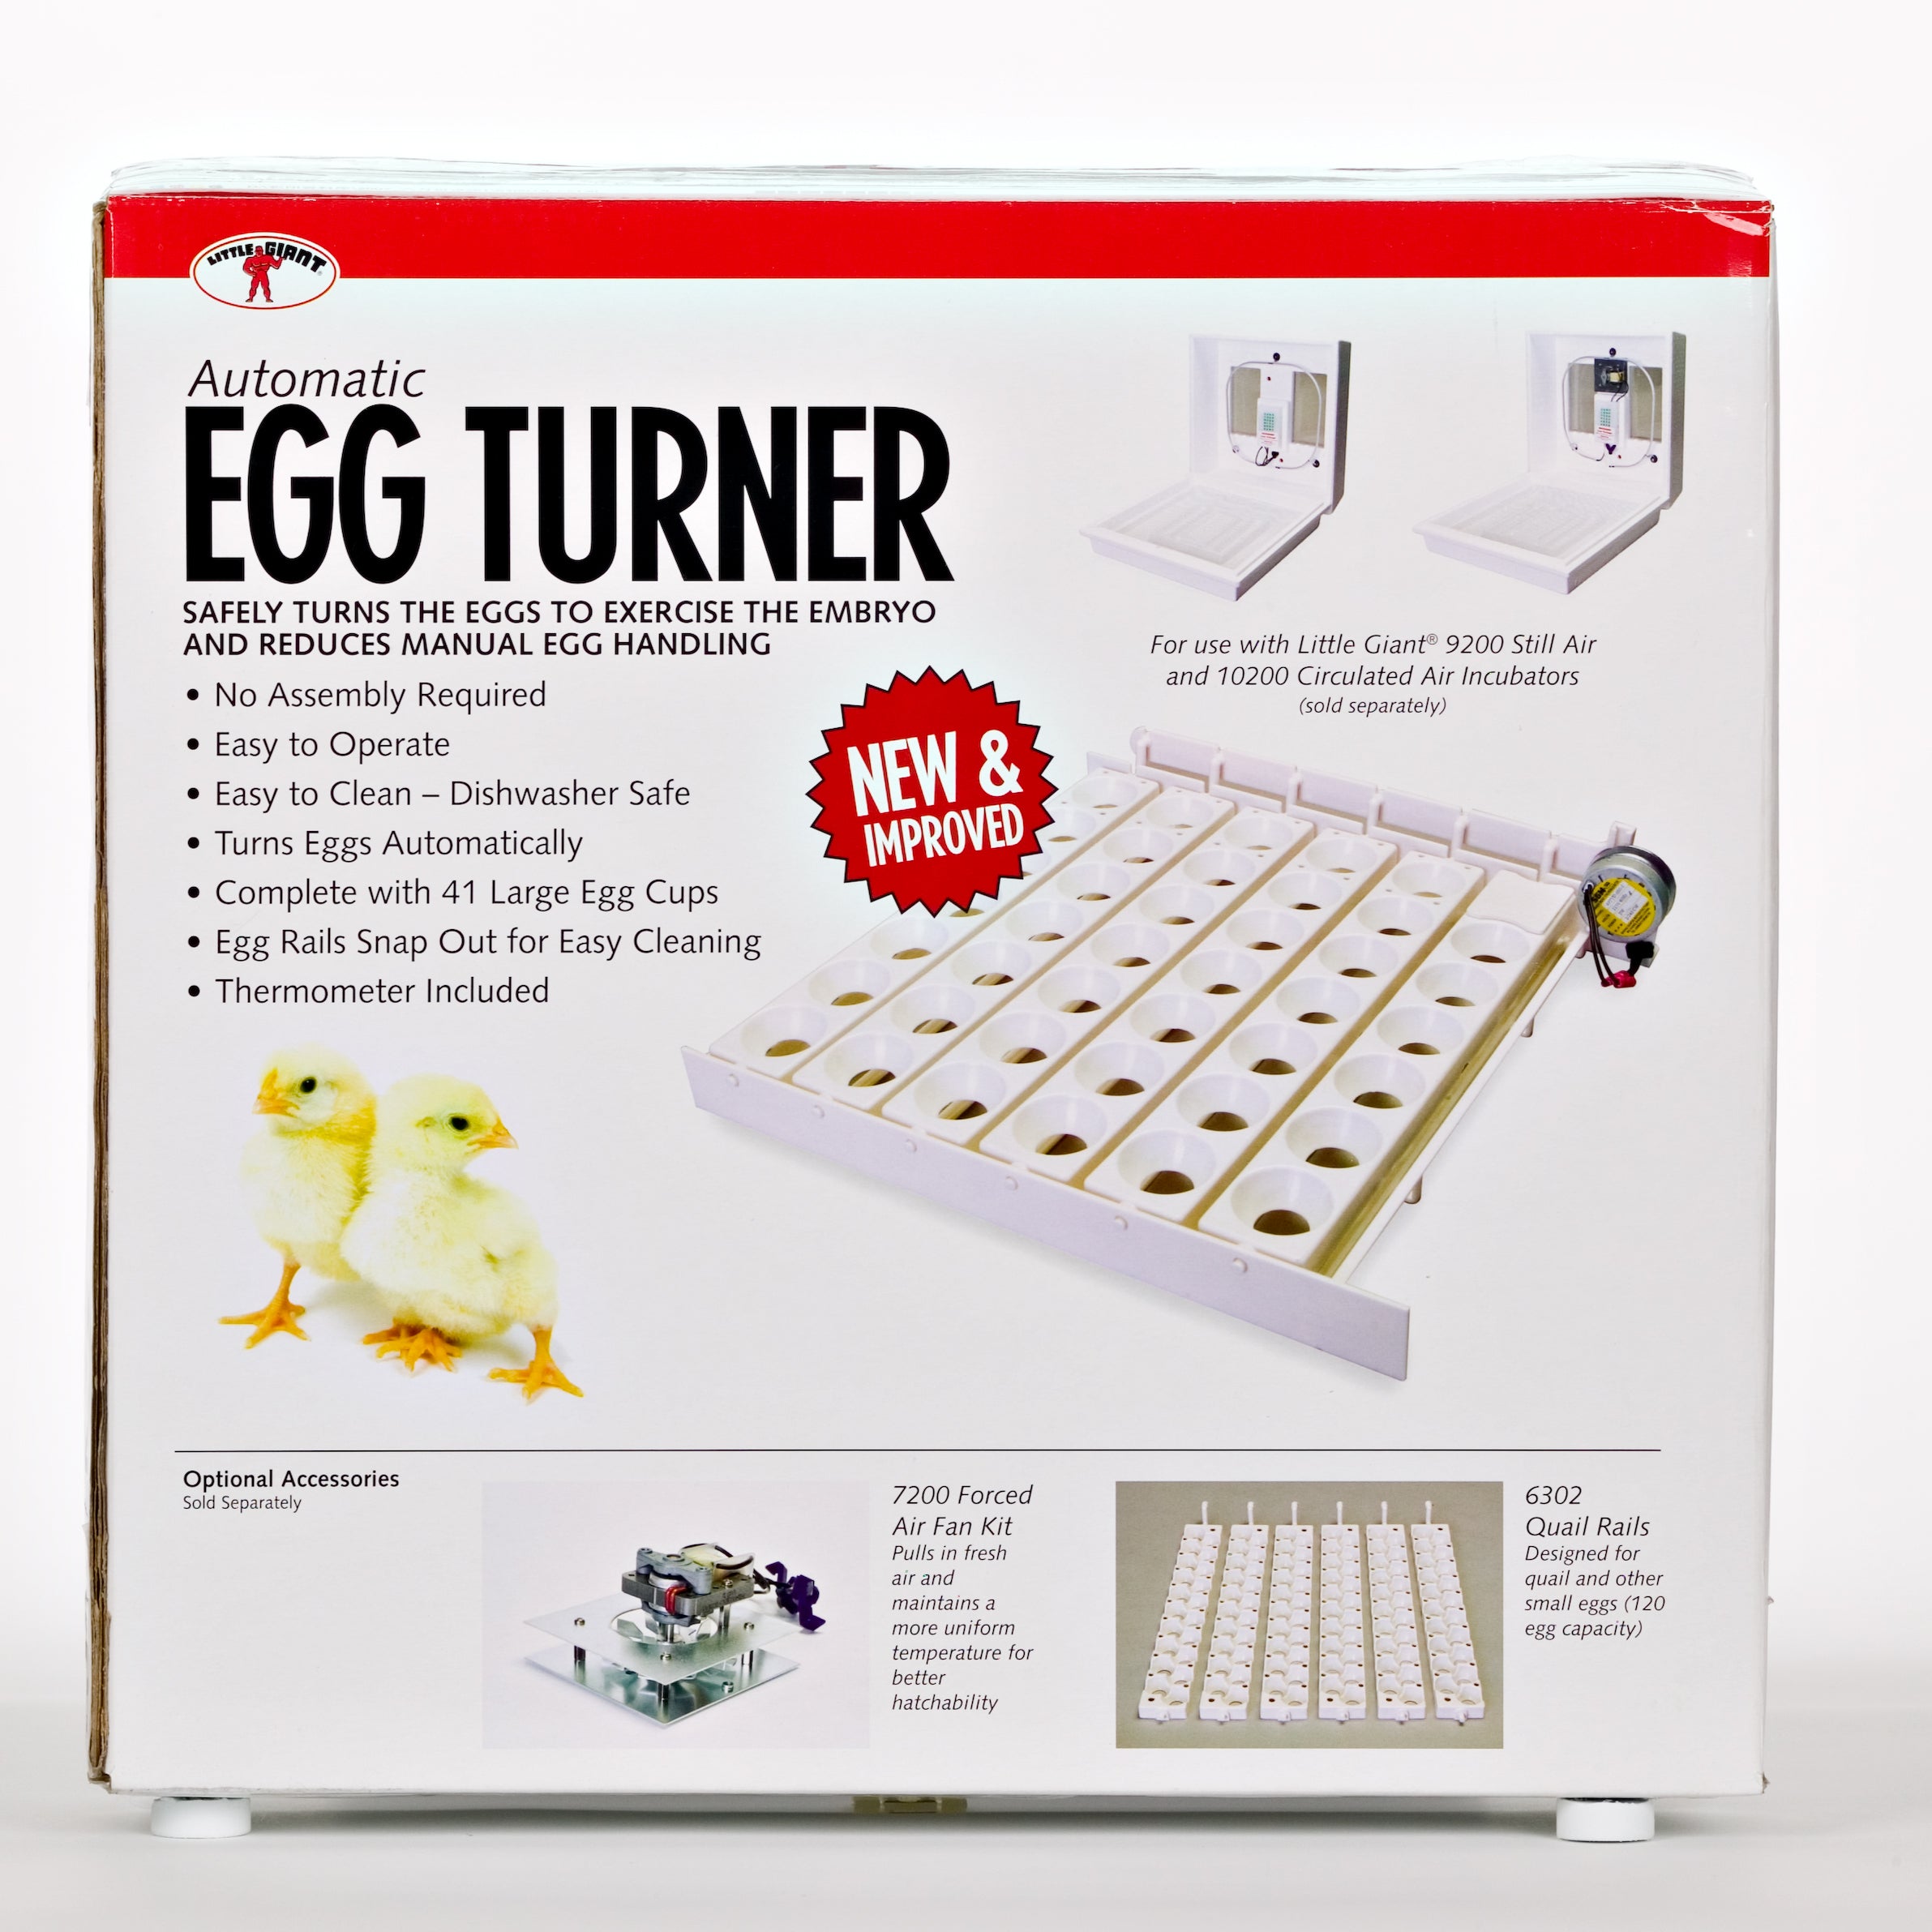 Little Giant - Automatic Egg Turner #6300 